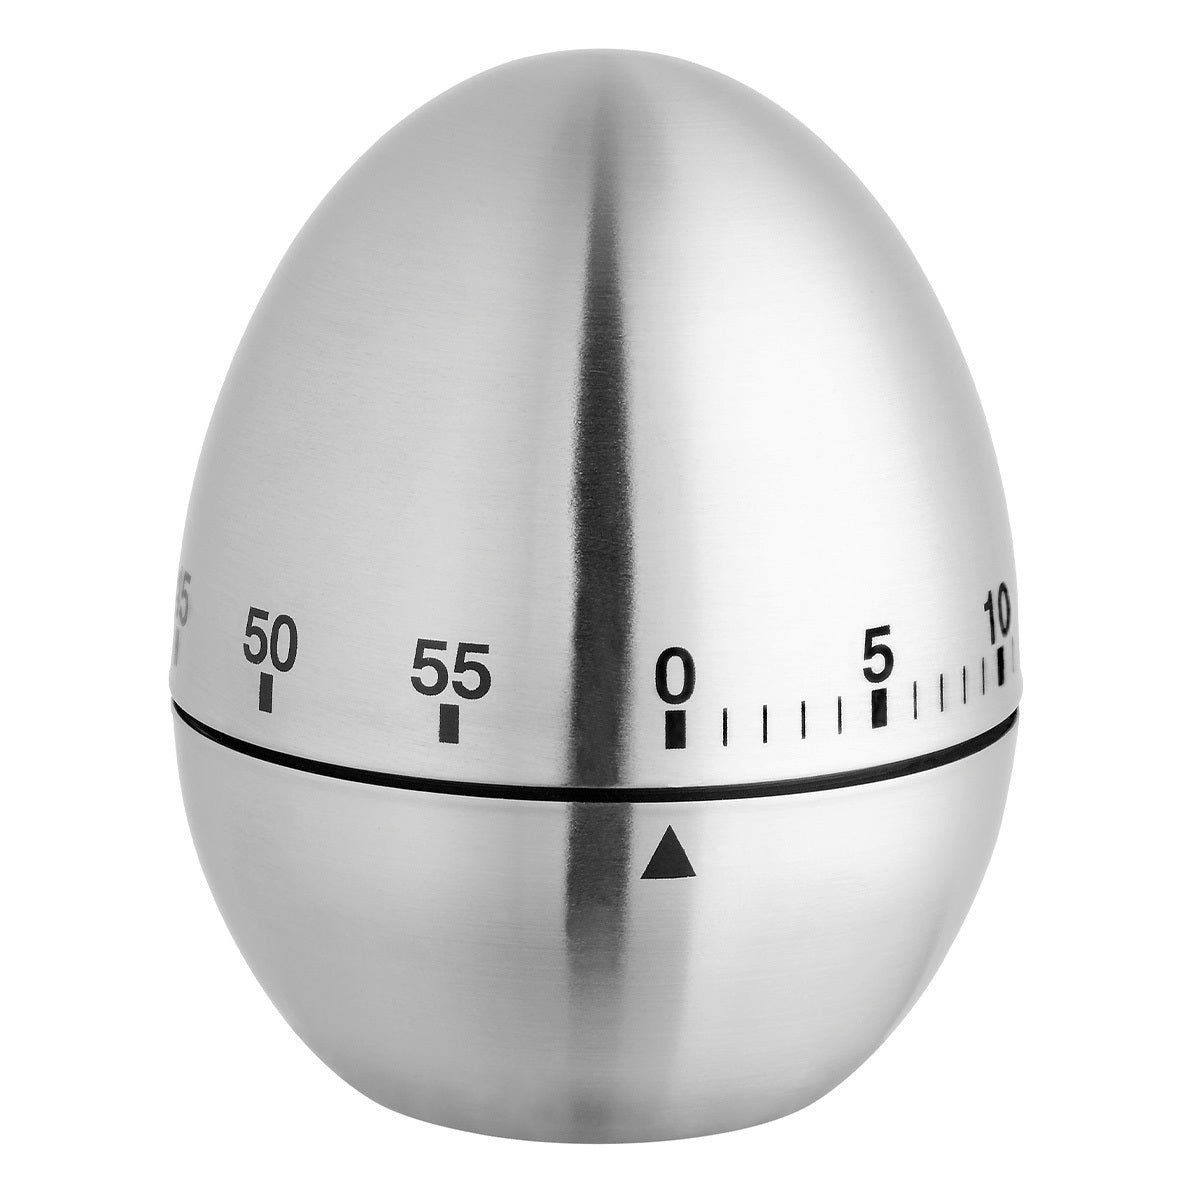 collini Egg-shaped Kitchen Timer - Interismo Online Shop Global